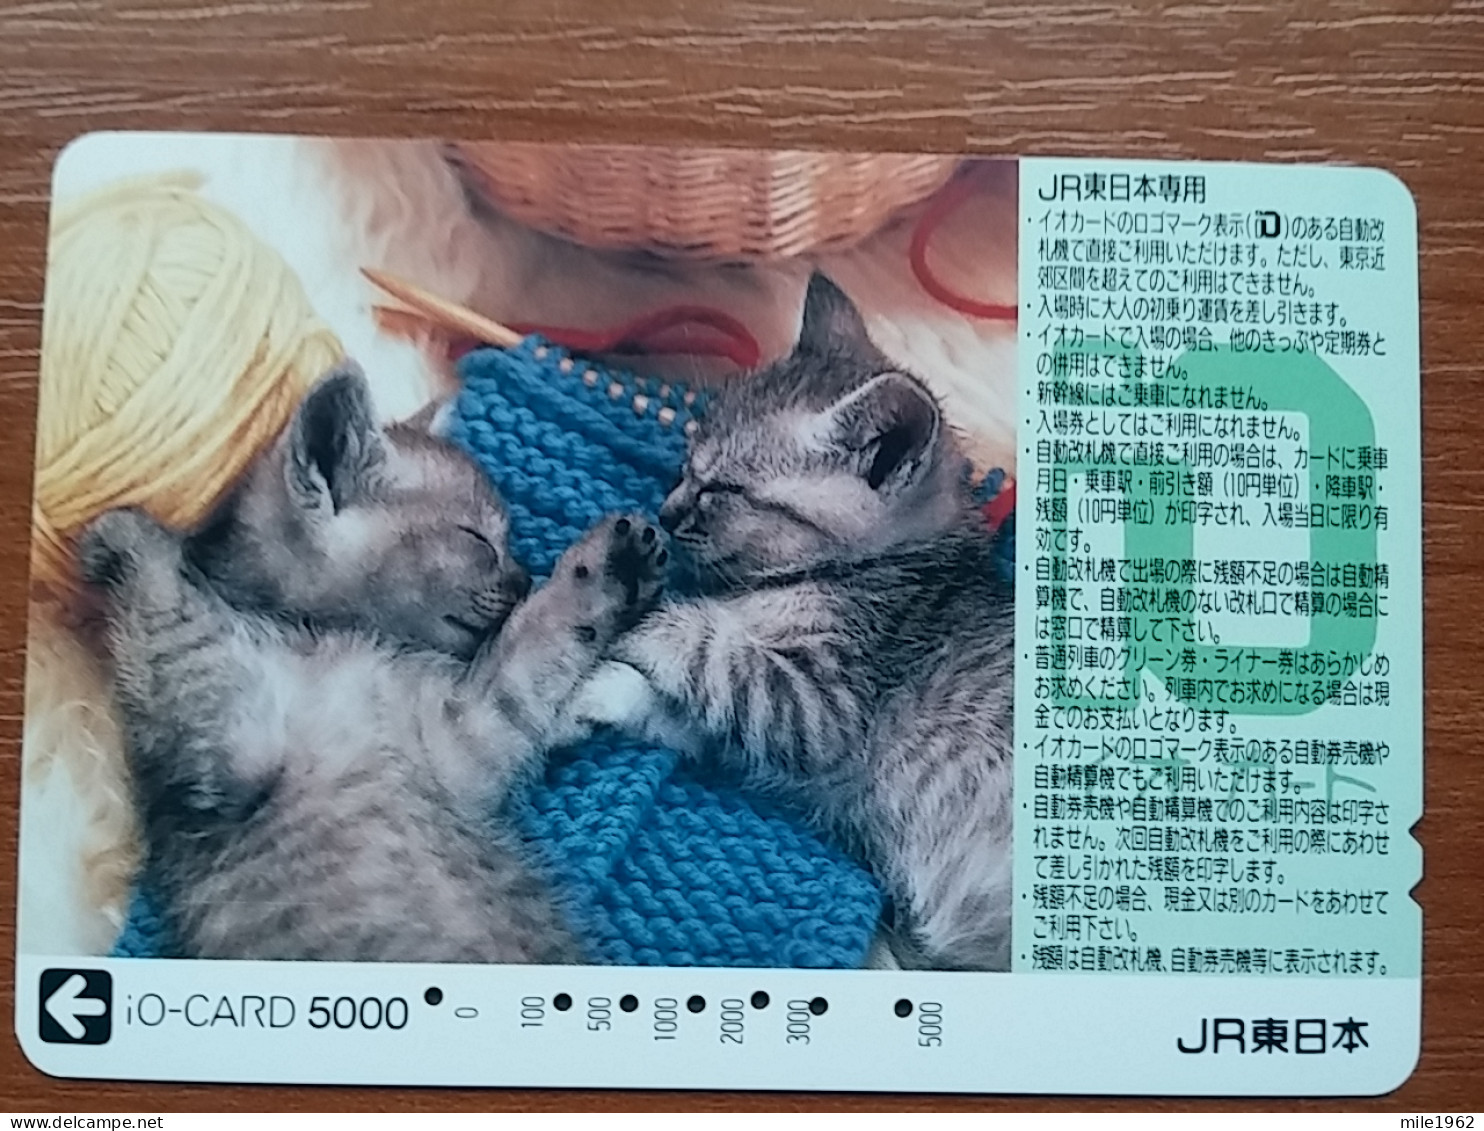 T-402 - JAPAN, Japon, Nipon, Carte Prepayee, Prepaid Card, CAT, CHAT,  - Cats